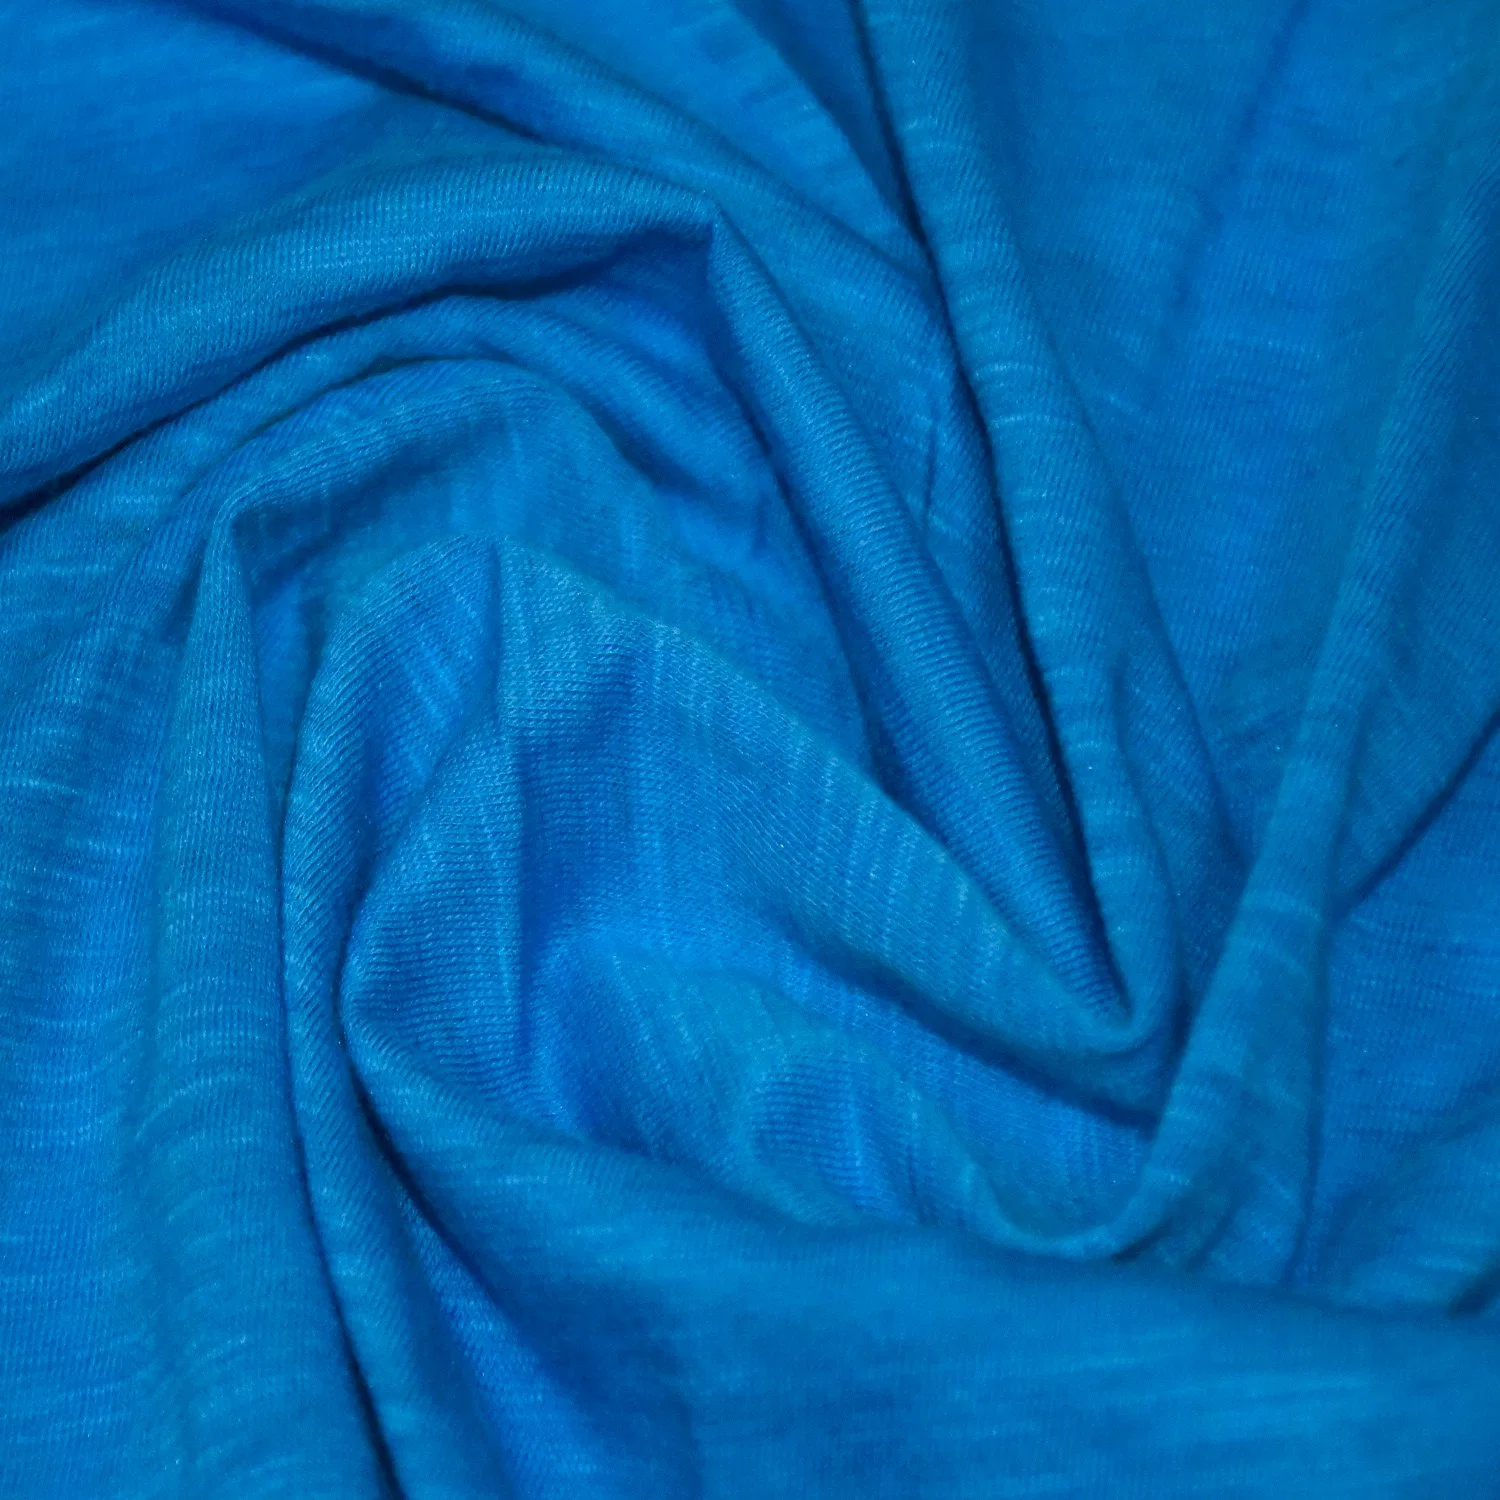 120GSM Modal/Cotton Jersey for Garment